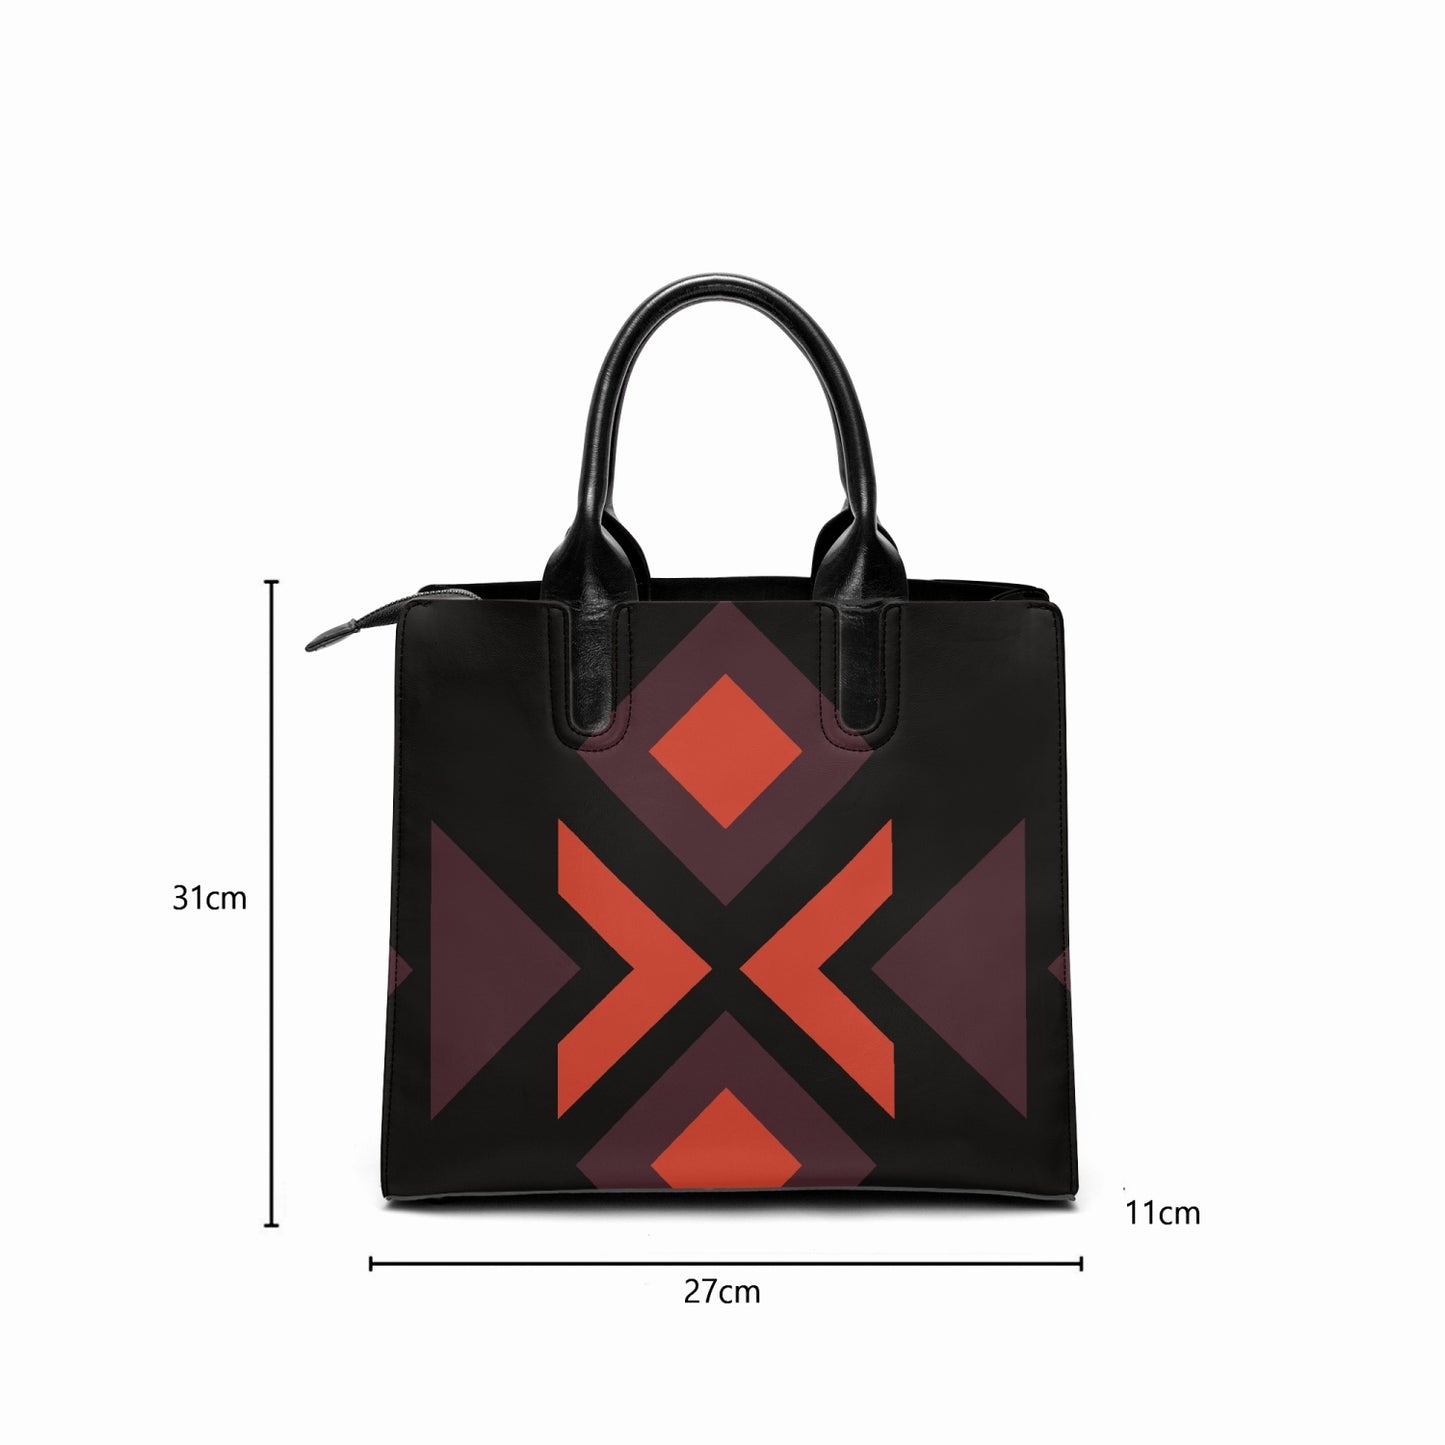 724. Concise U-shaped Handle Tote Bag